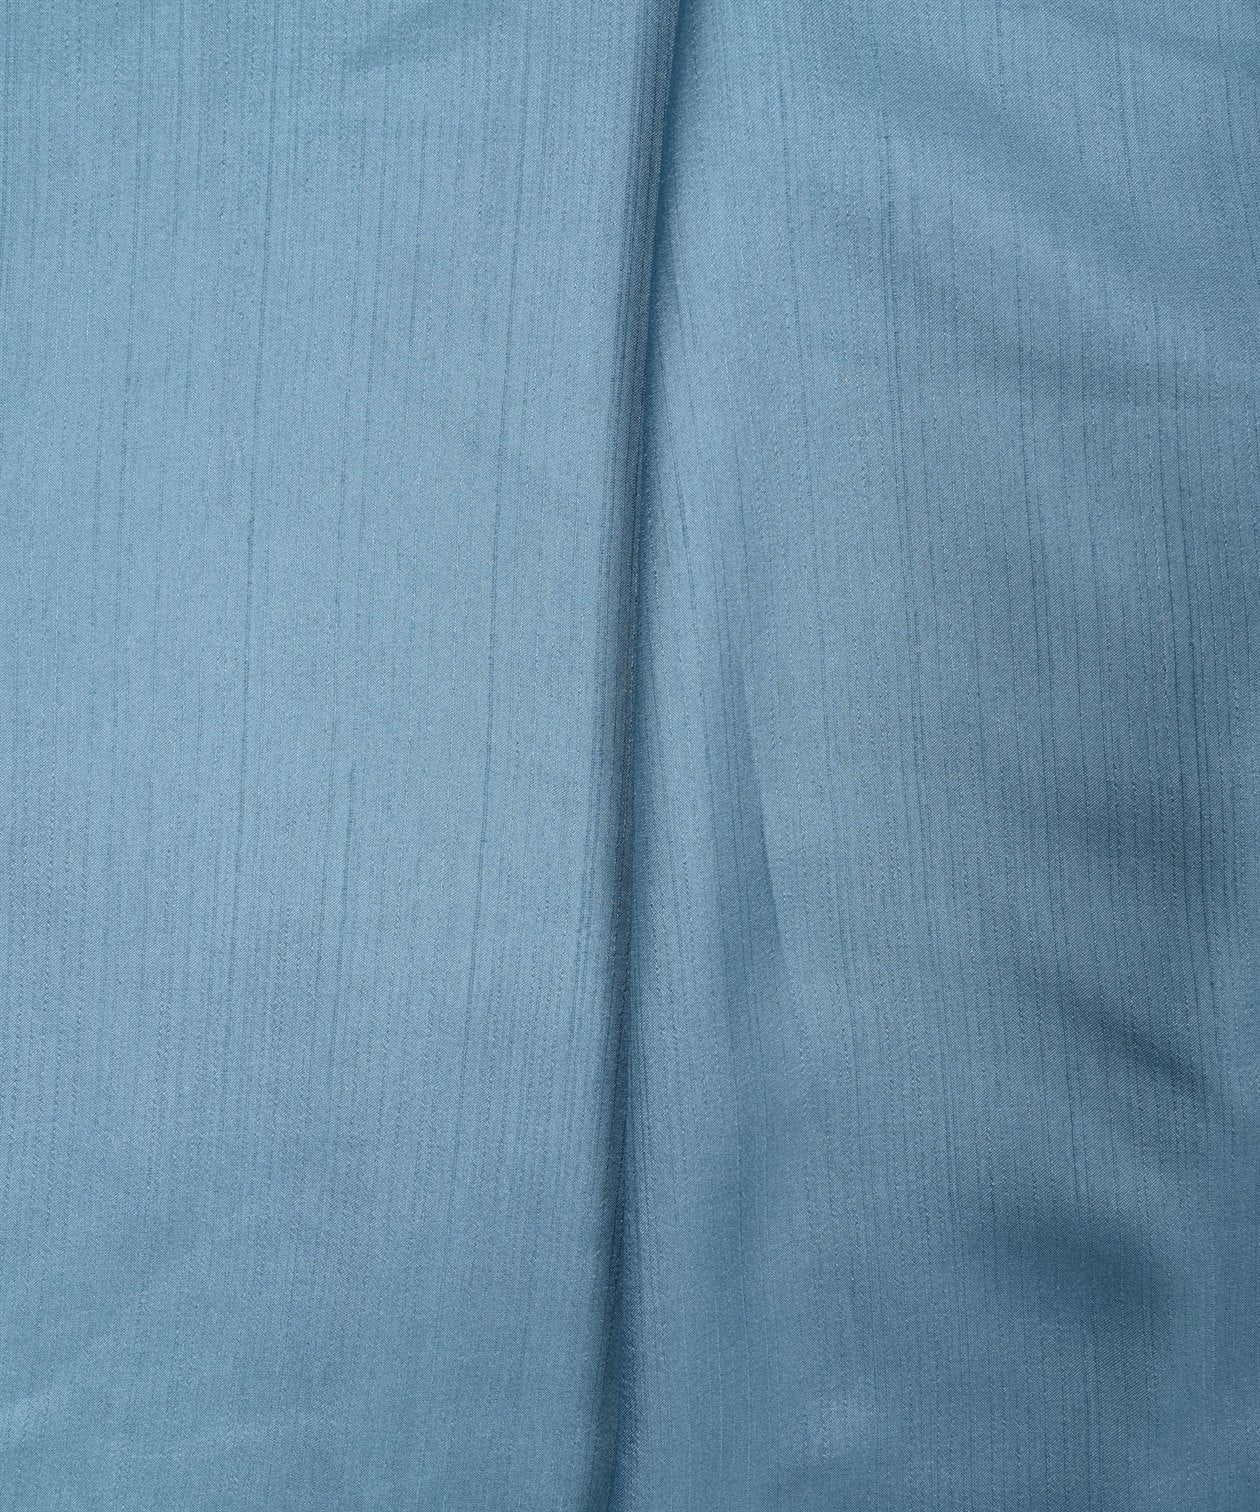 Aqua Blue Plain Satin Georgette Slub Fabric